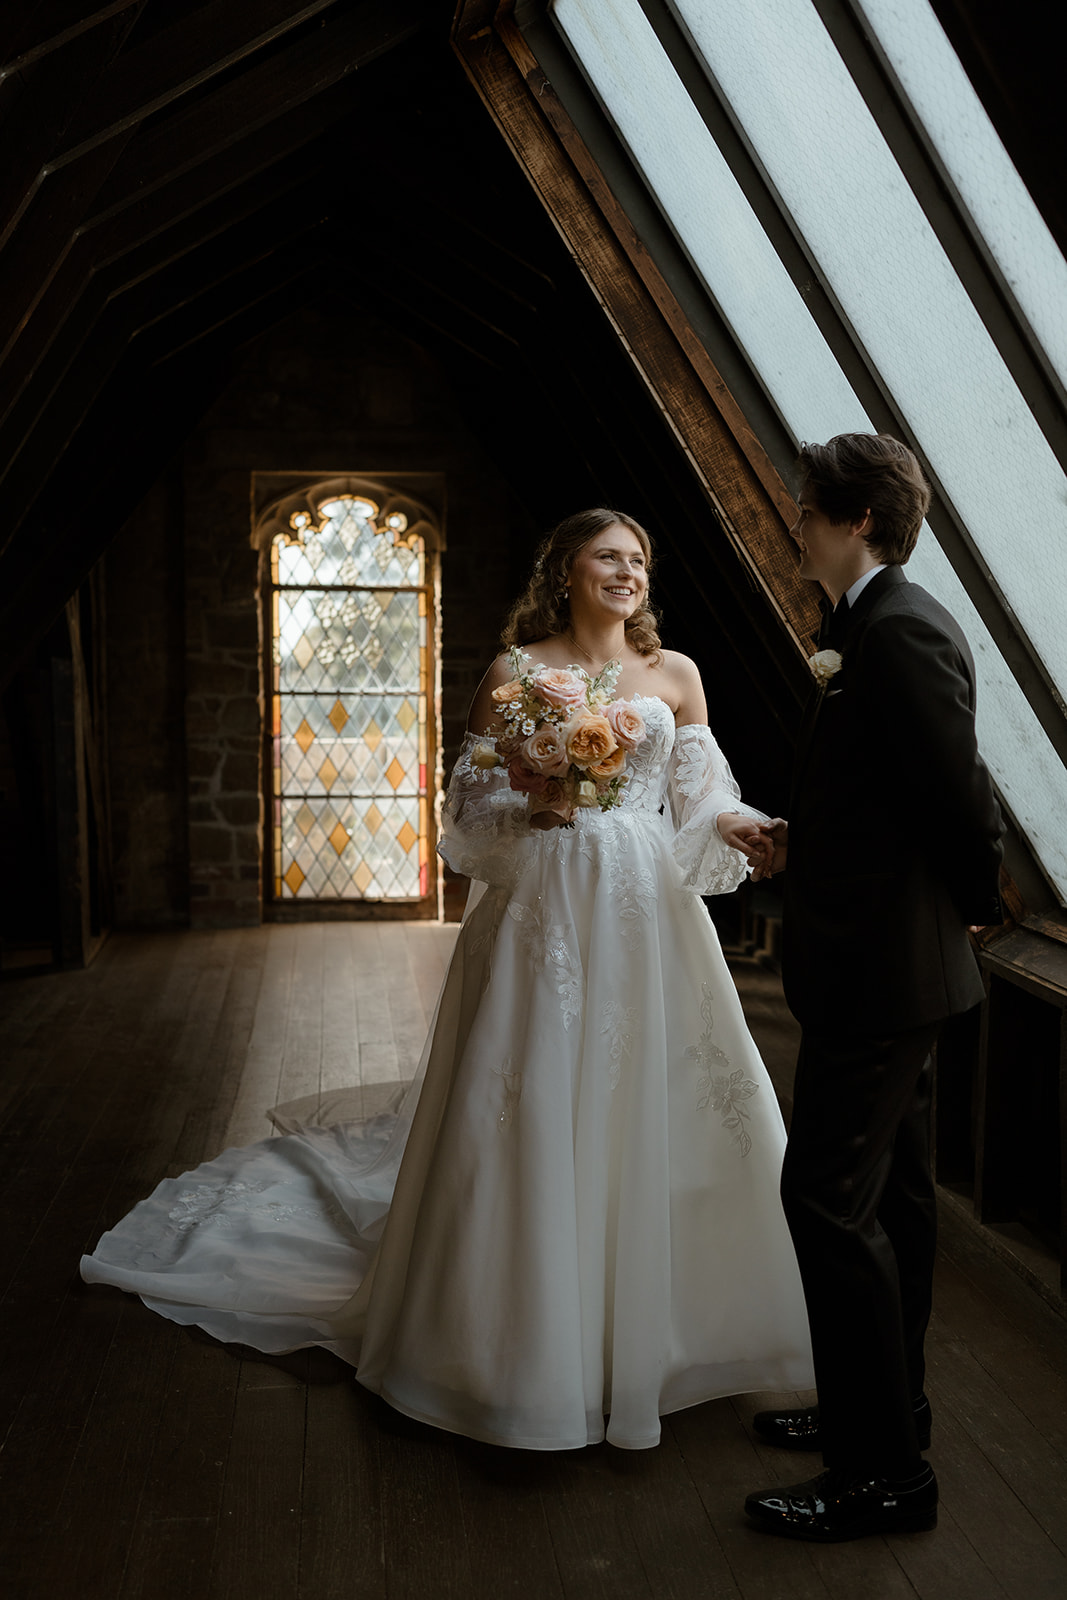 Romantic attic wedding portraits at Montsalvat, captured by Melbourne photographers